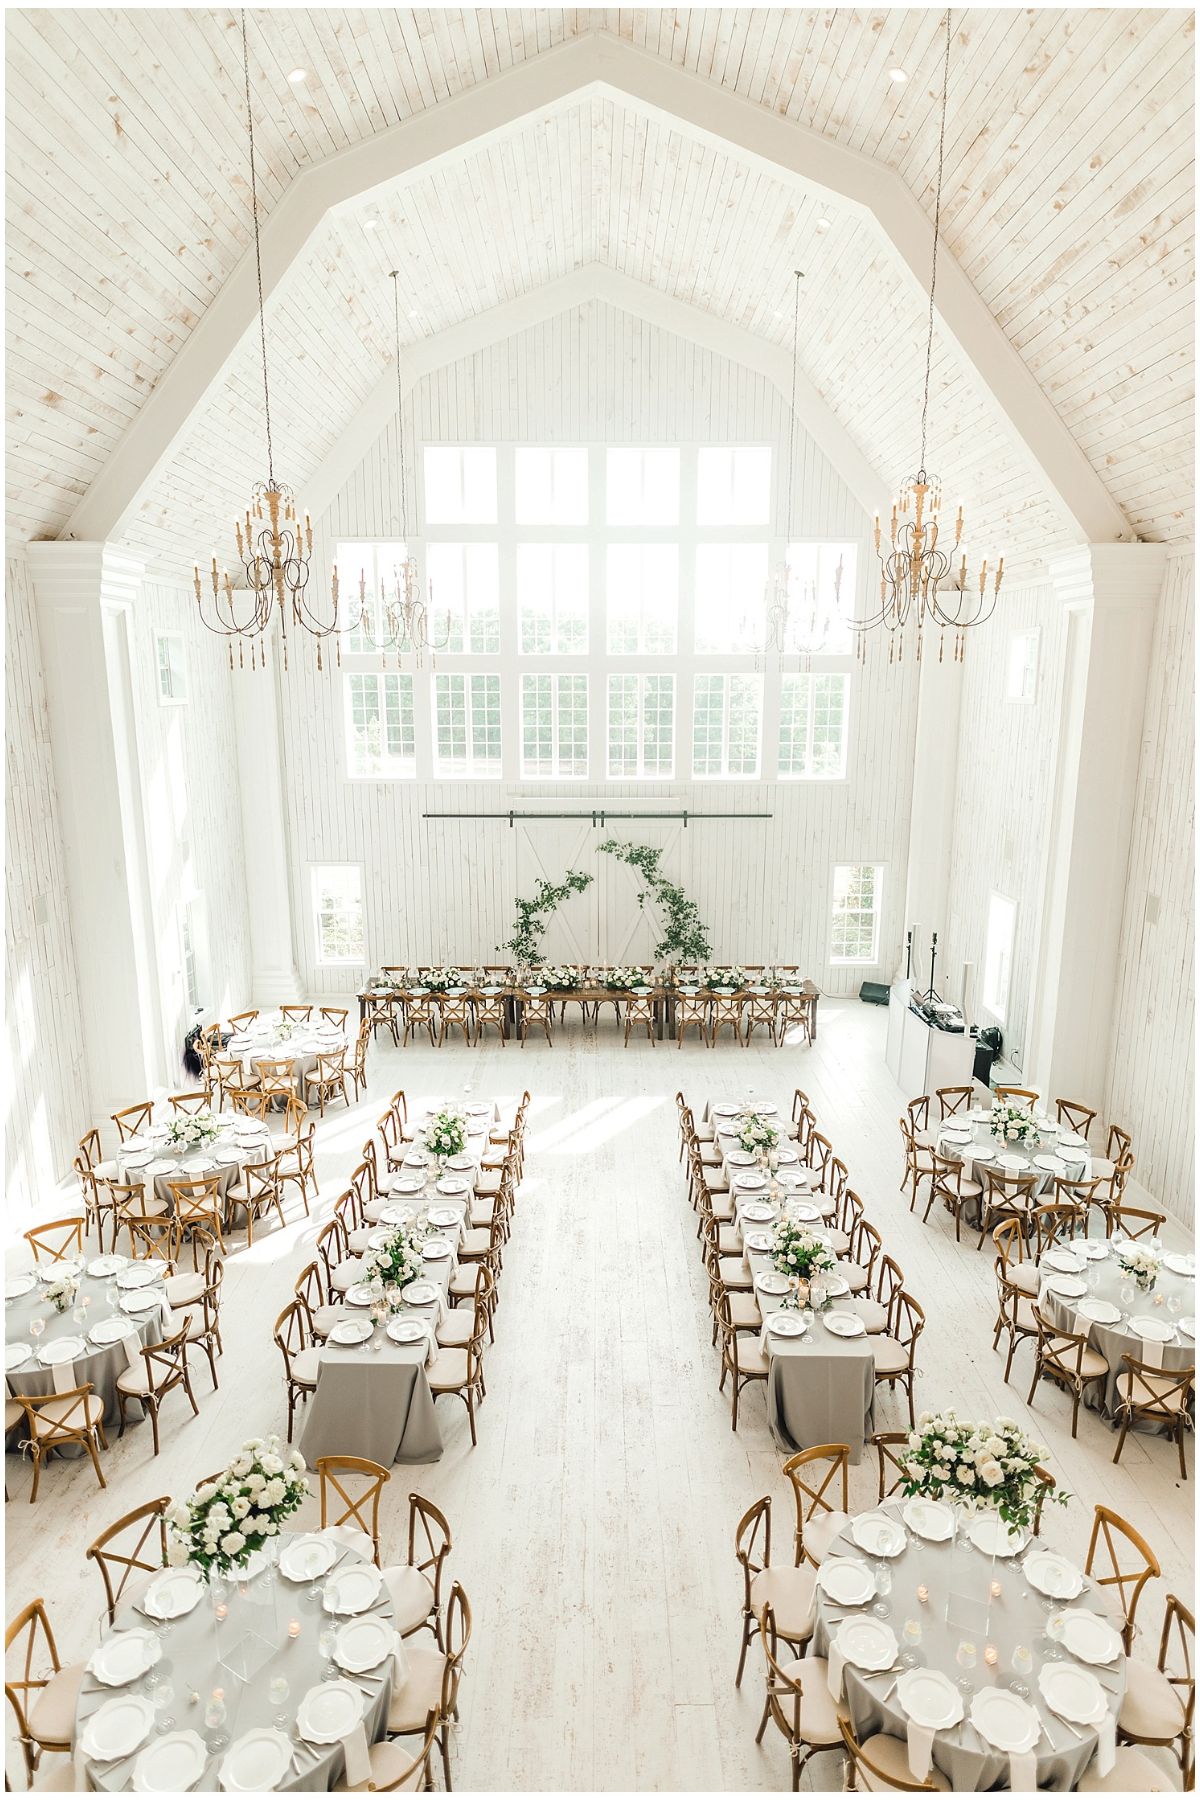 Wedding Reception Seating Configuration Ideas: Top 10